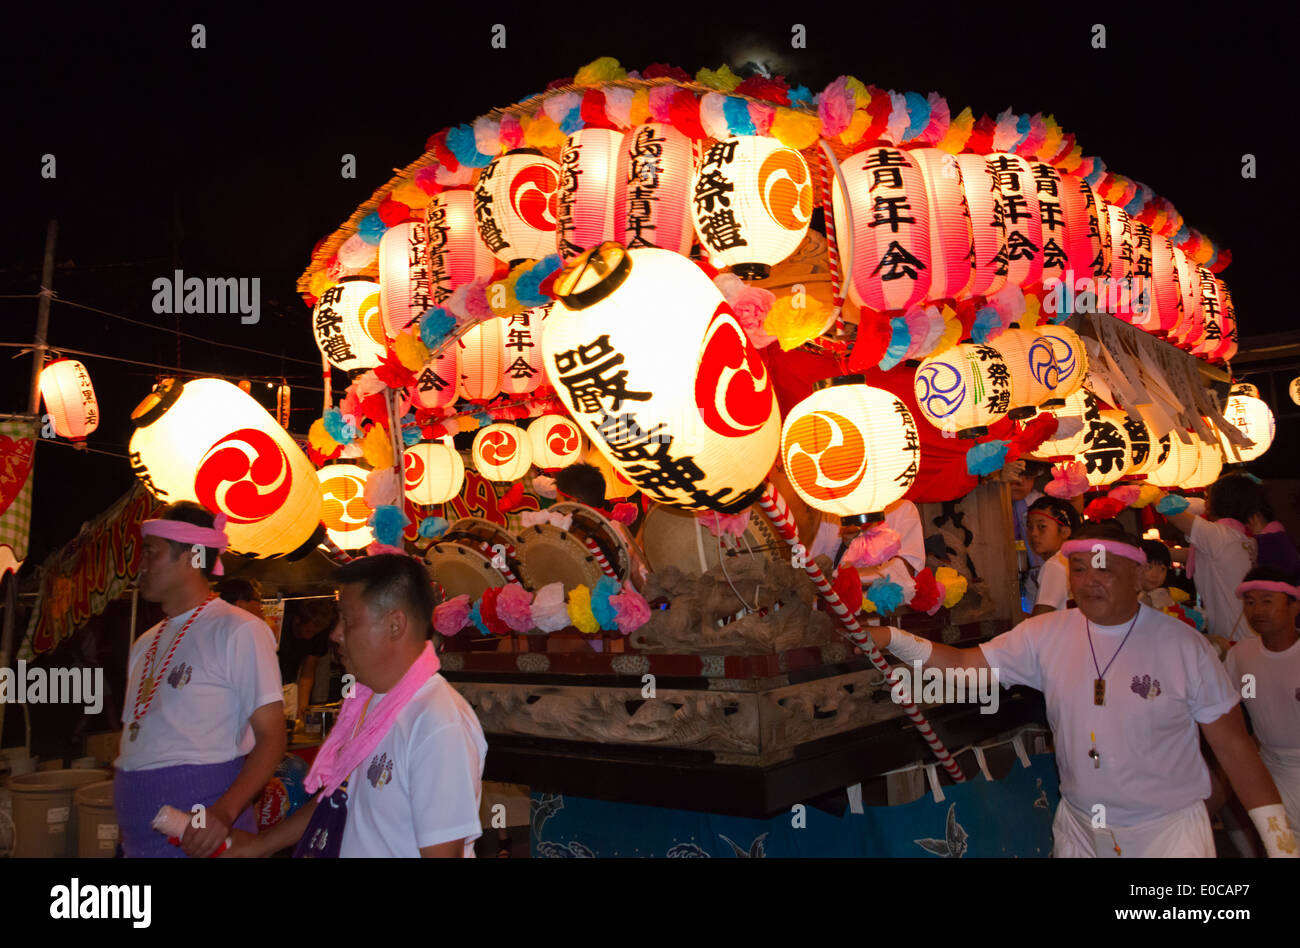 Celebrating Shirahama Ama Festival at night, Minamiboso, Chiba Prefecture, Japan Stock Photo